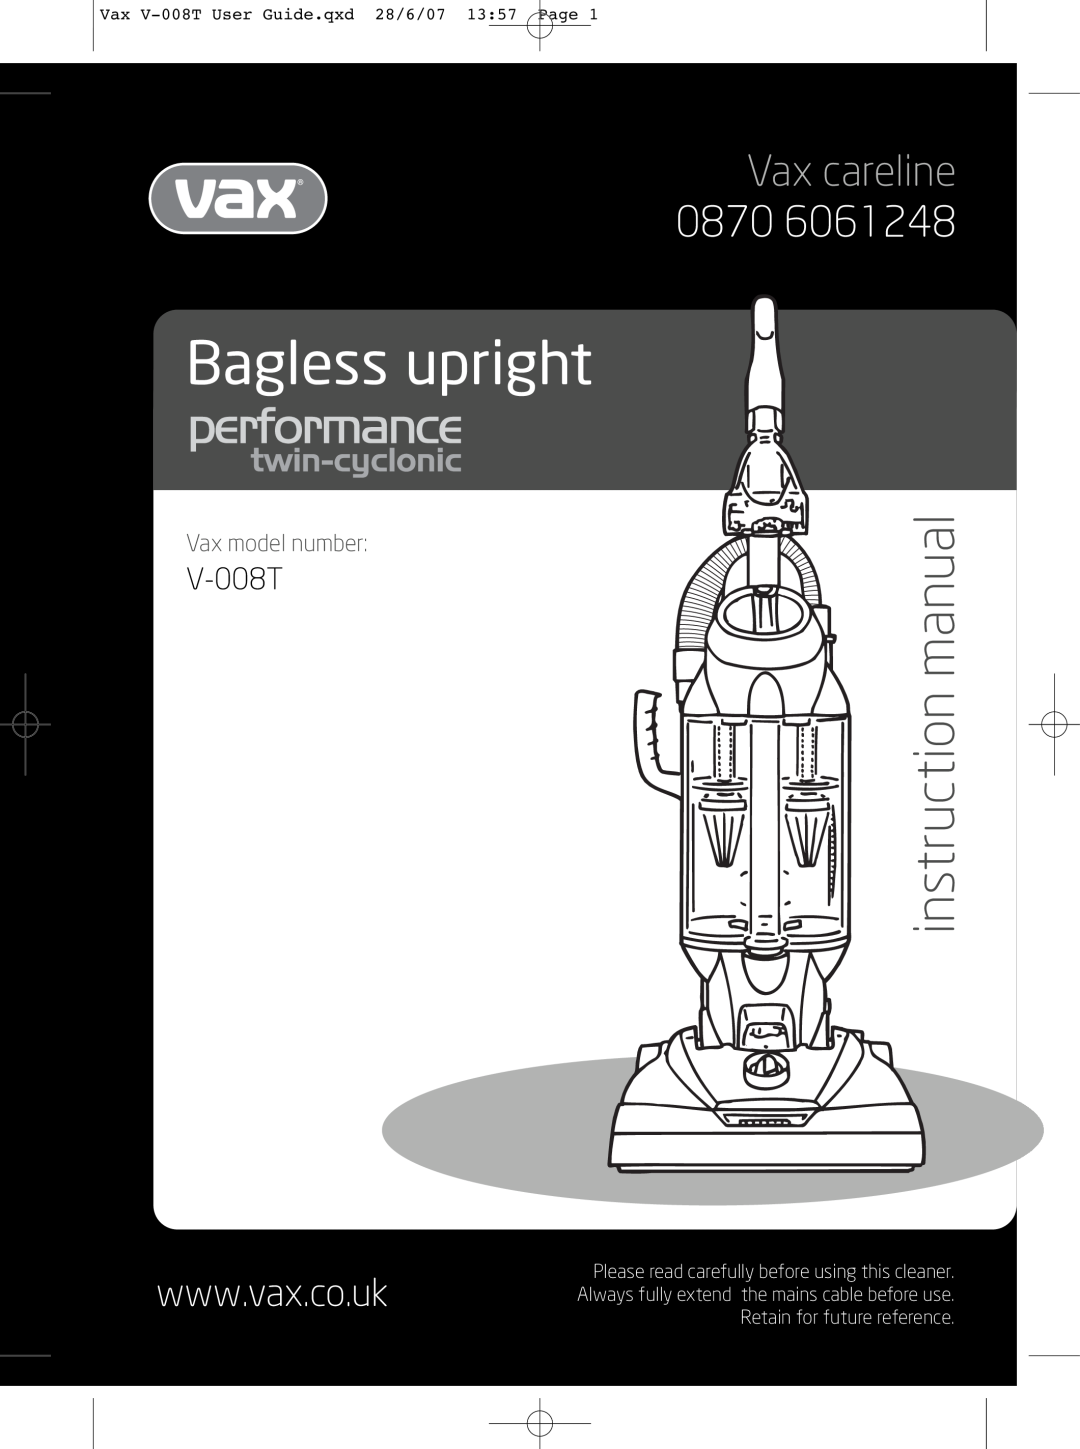 Vax instruction manual Vax V-008TUser Guide.qxd 28/6/07 13 57 Page, Bagless upright, Vax careline, Vax model number 